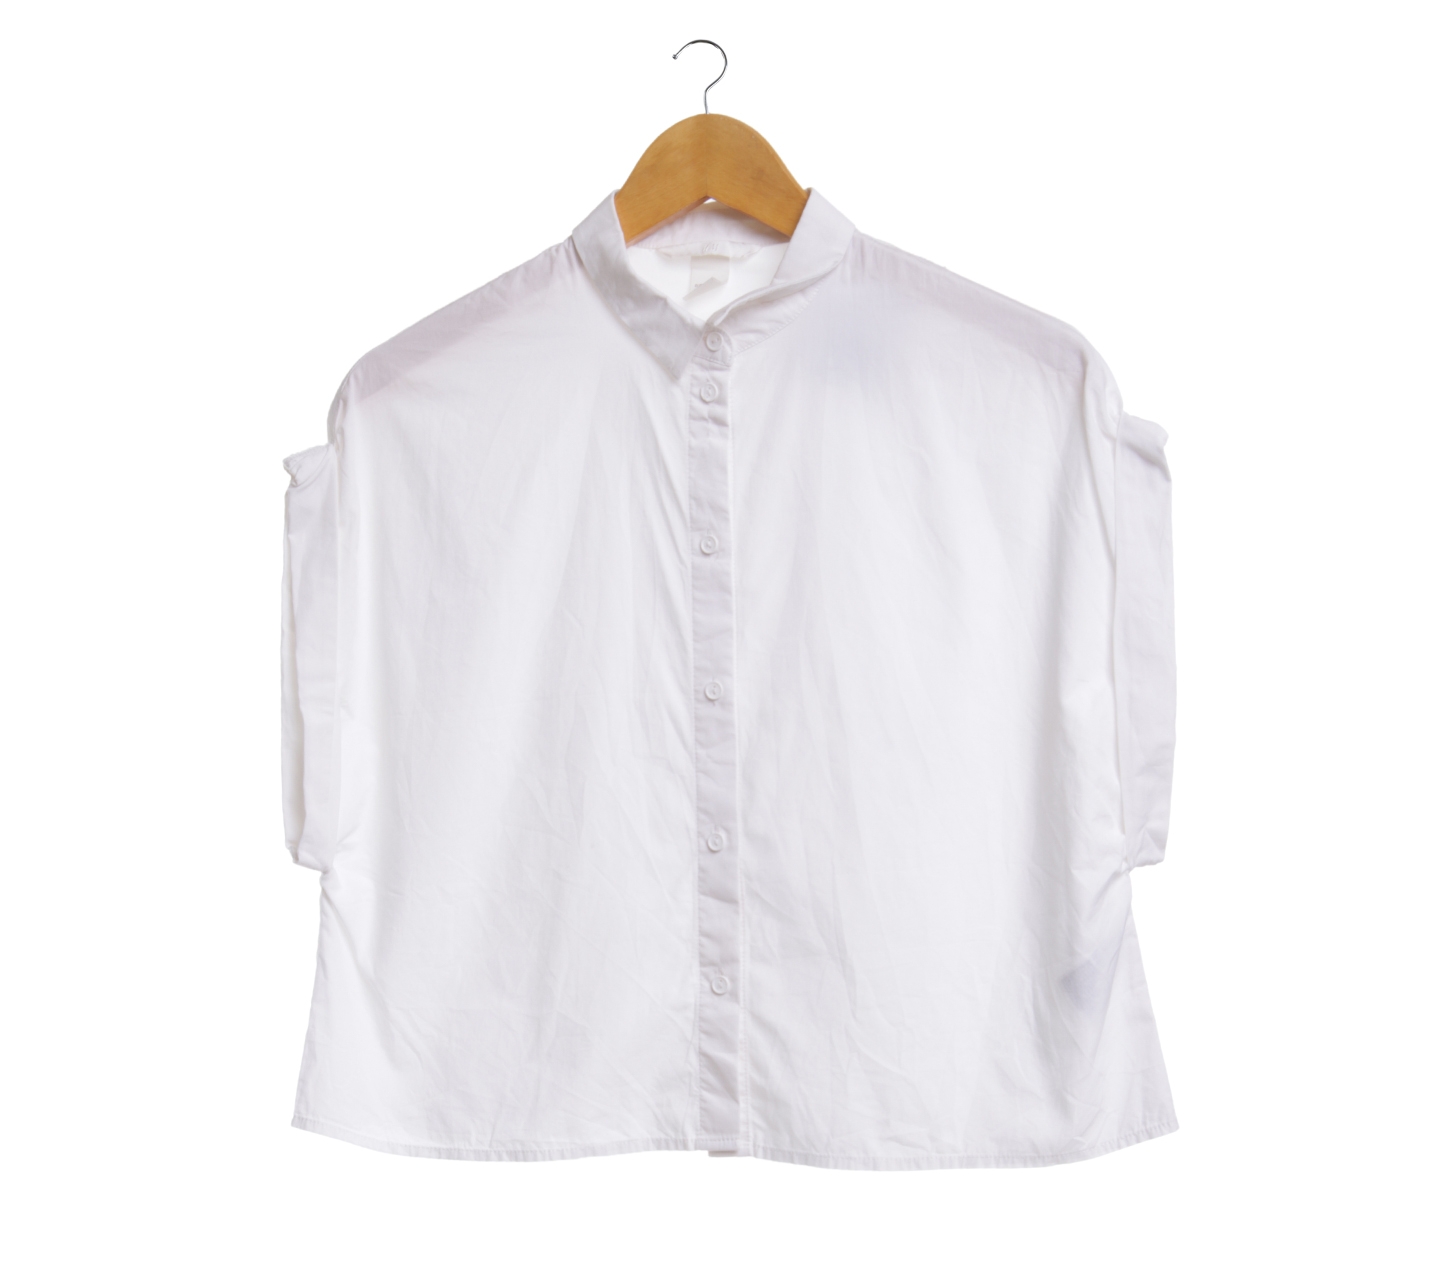 H&M Off White Short Sleeve Shirt